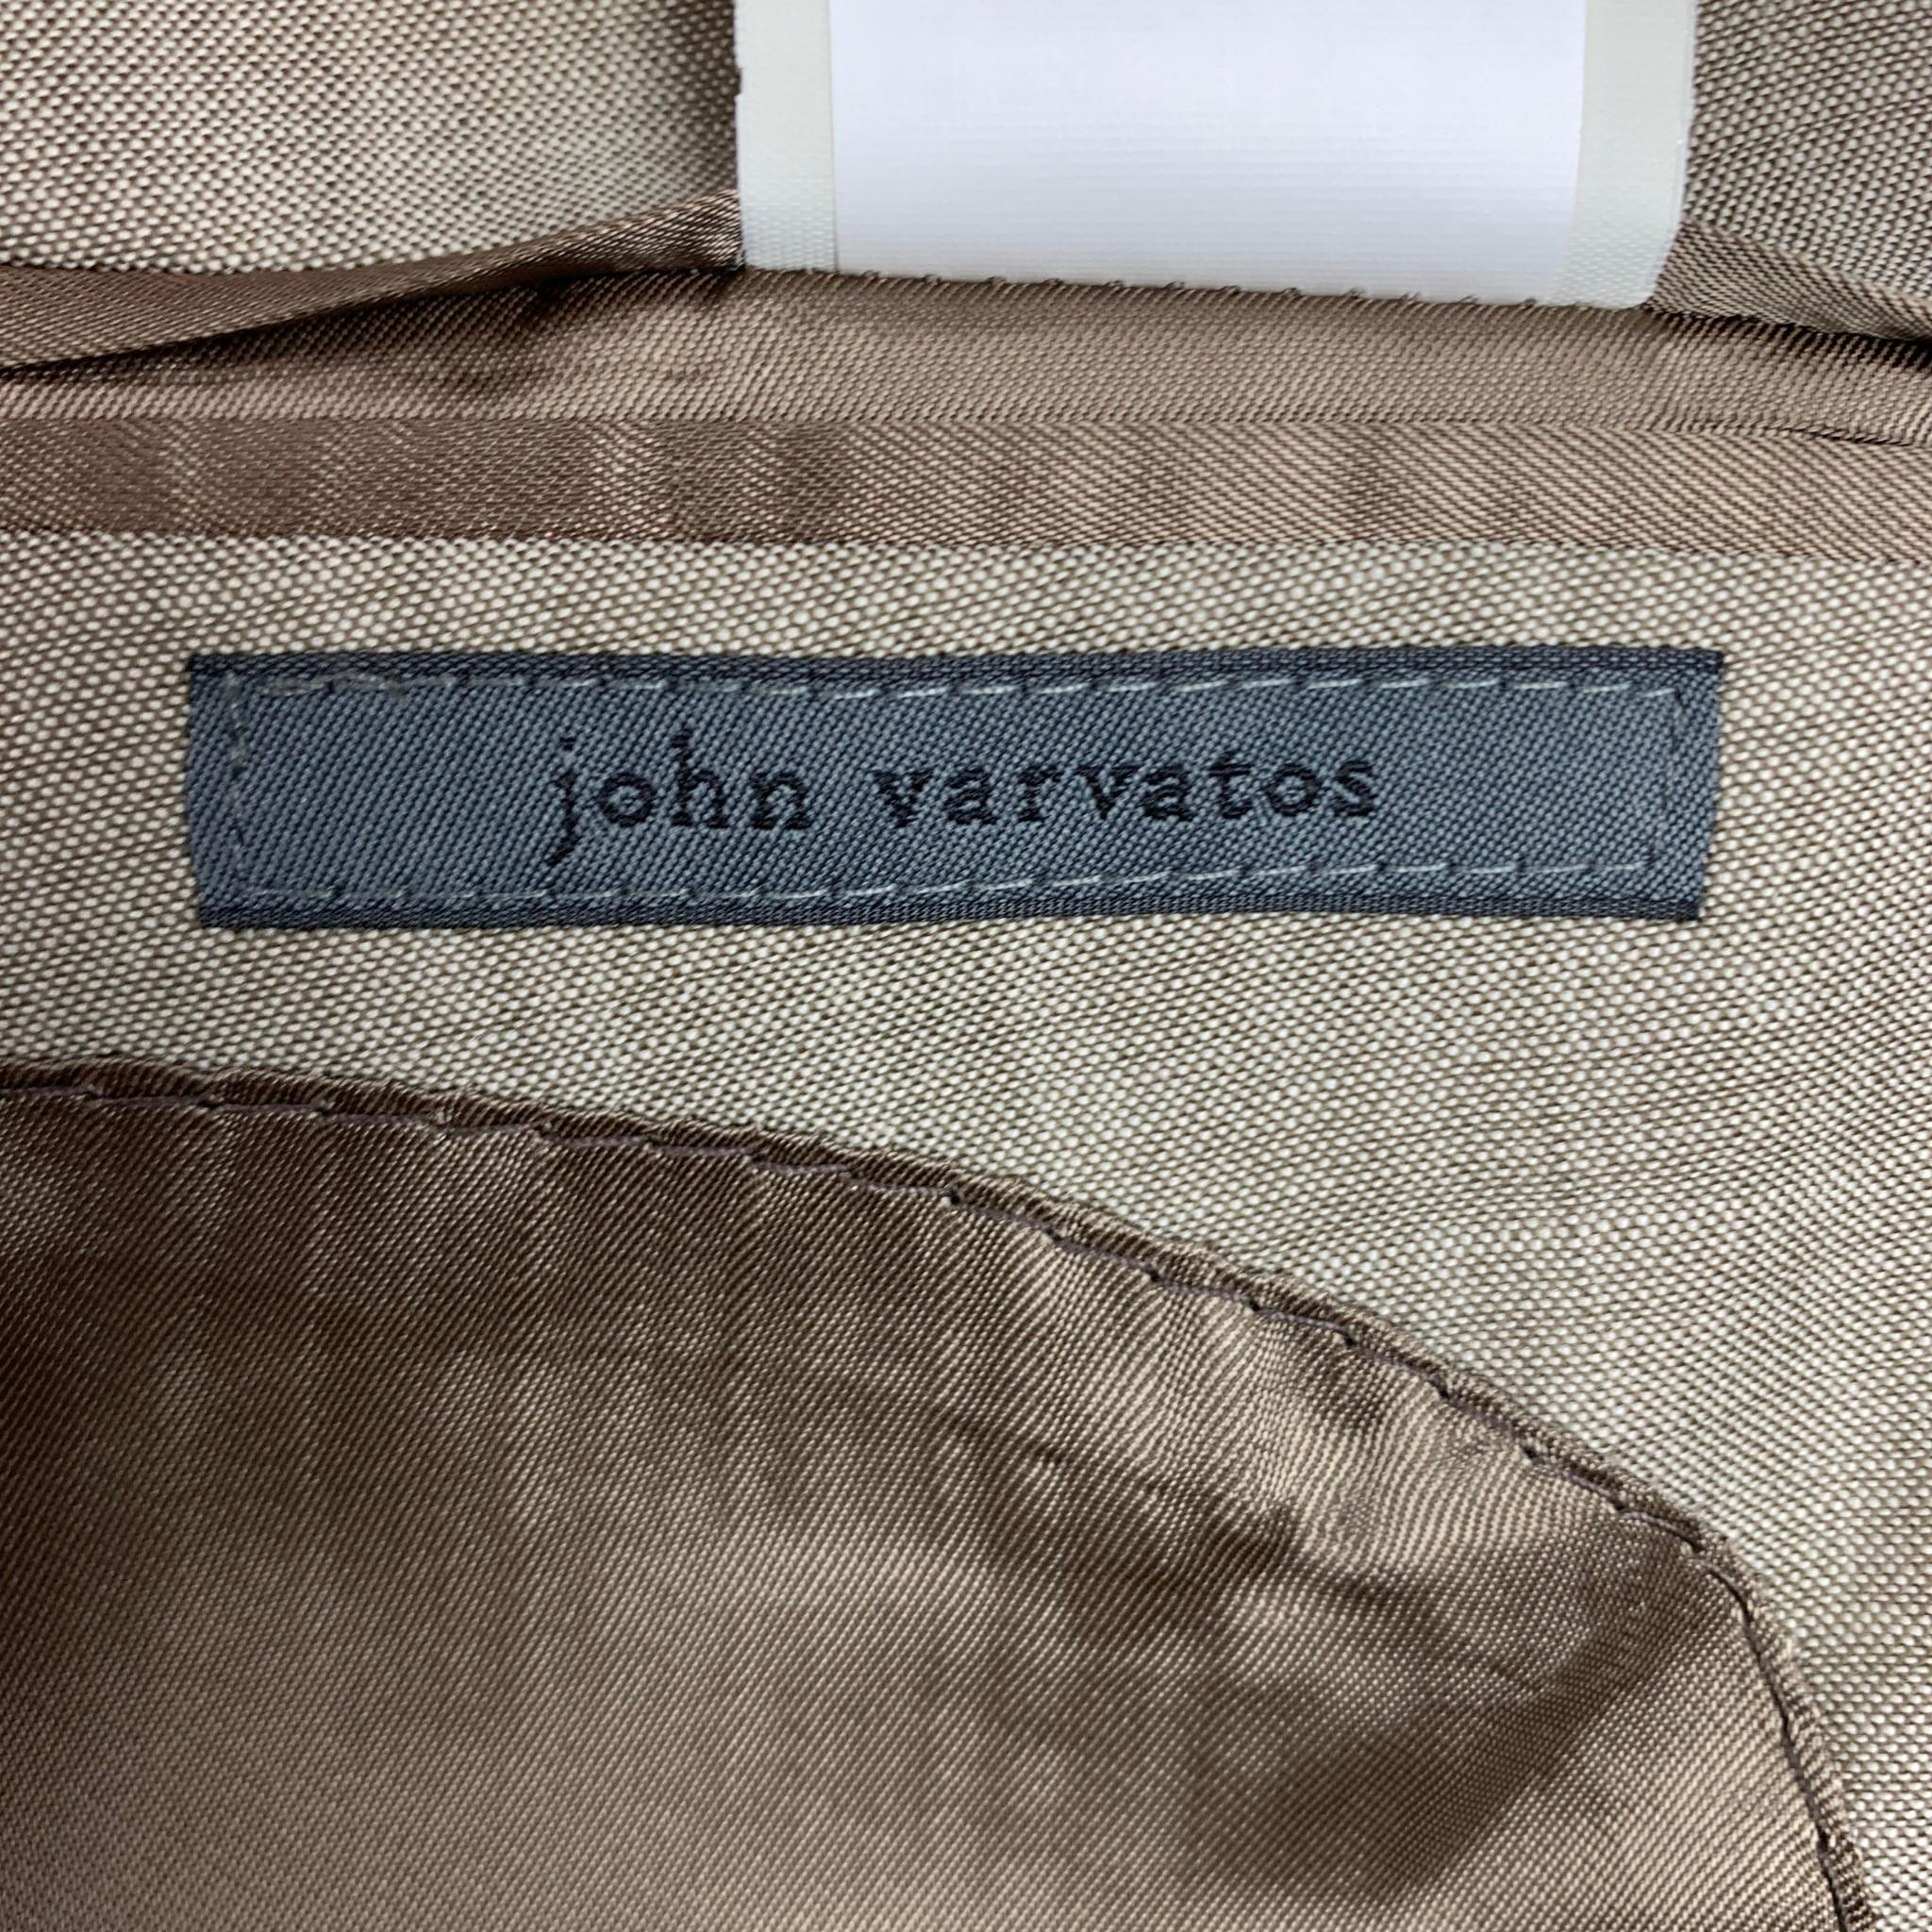 JOHN VARVATOS Size 42 Oatmeal Heather Wool / Mohair Notch Lapel Suit 4